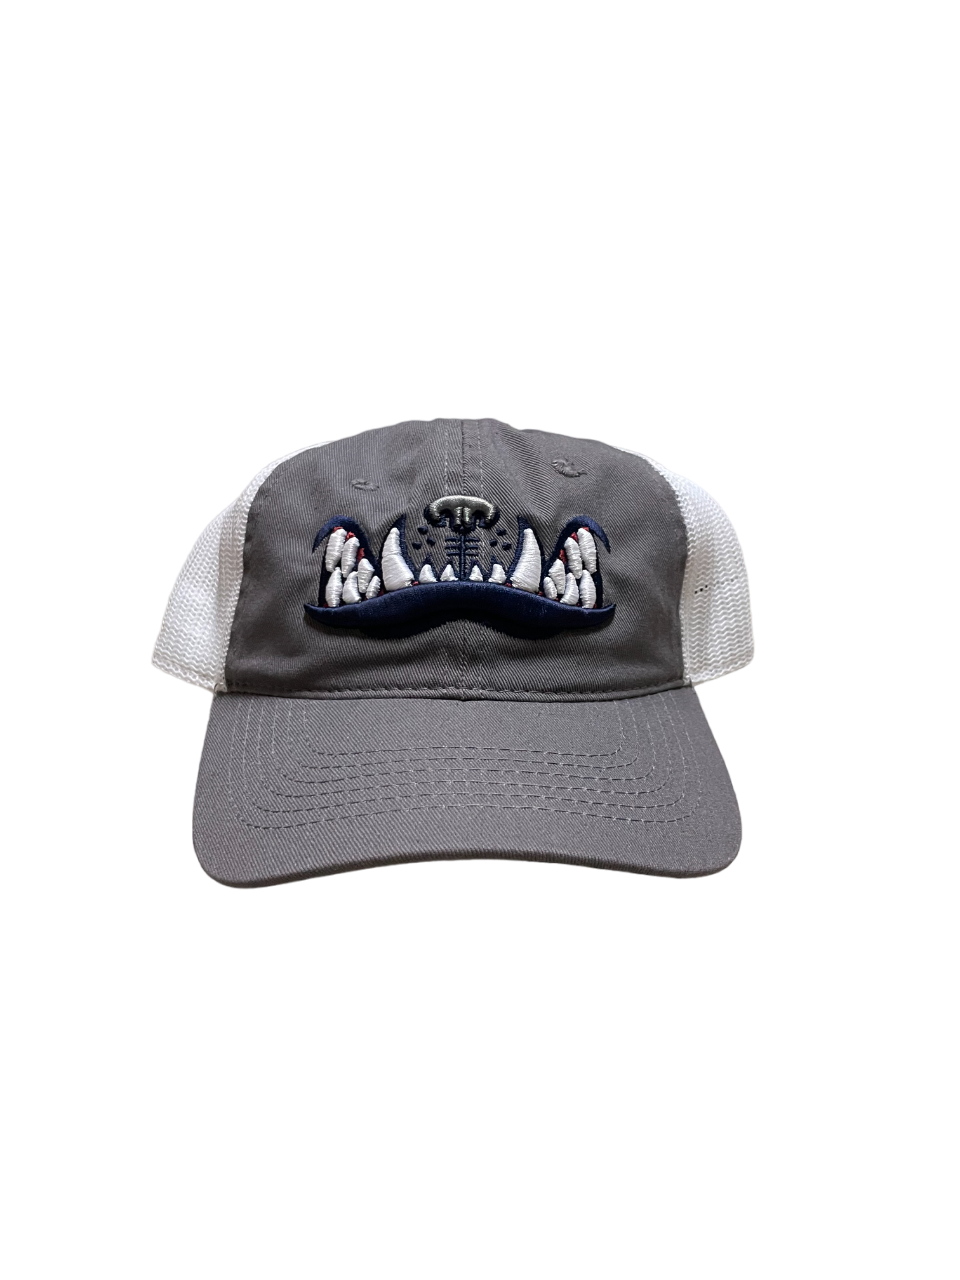 Youth Adjustable Grey/White Teeth Hat-0